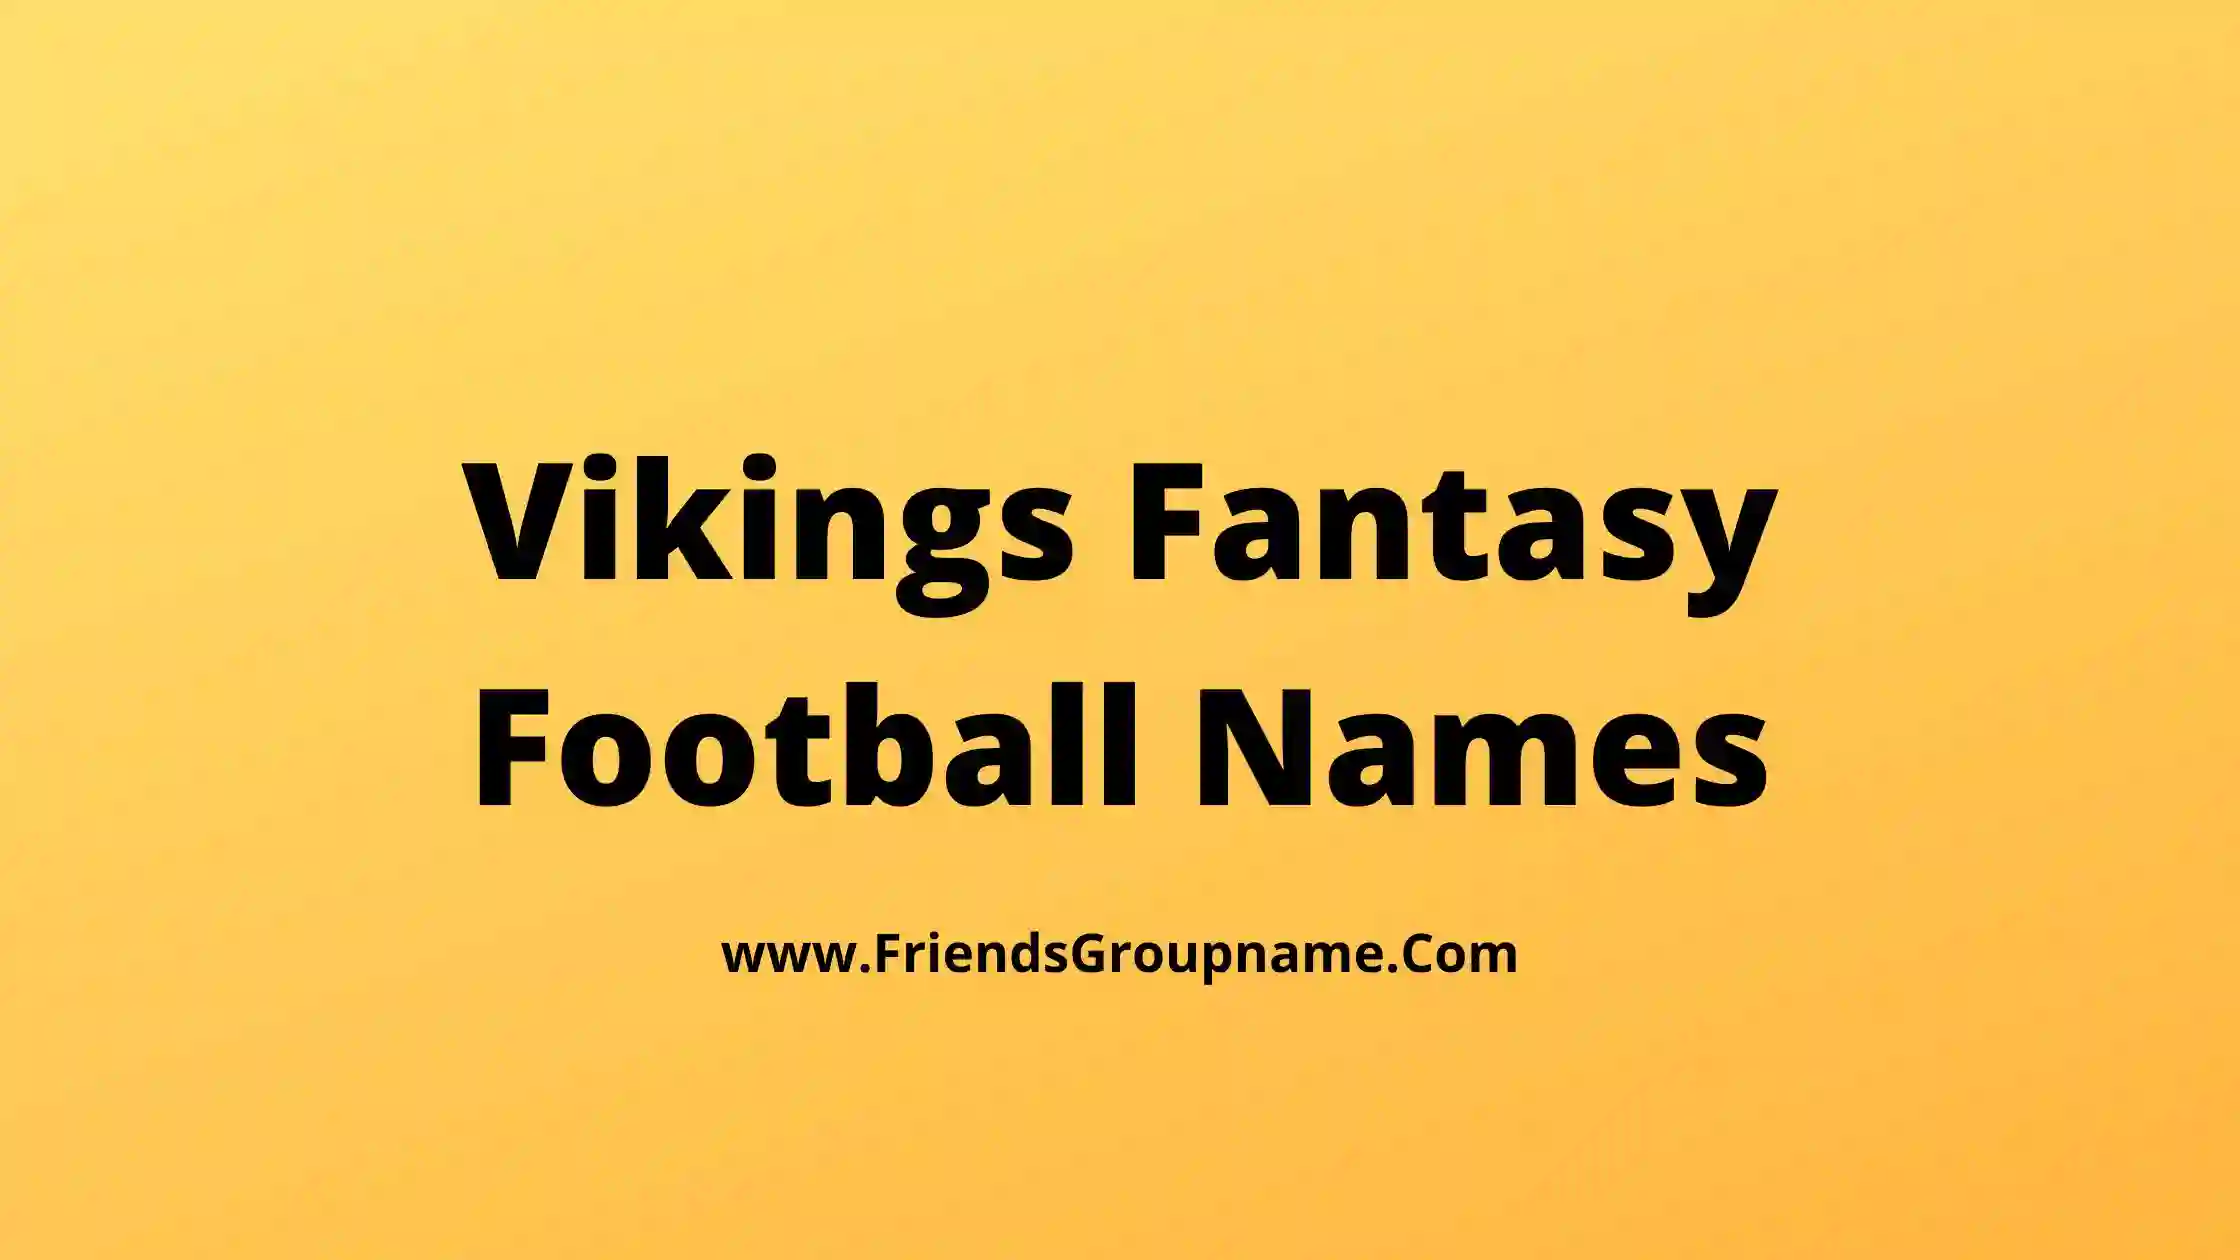 Vikings Fantasy Football Names